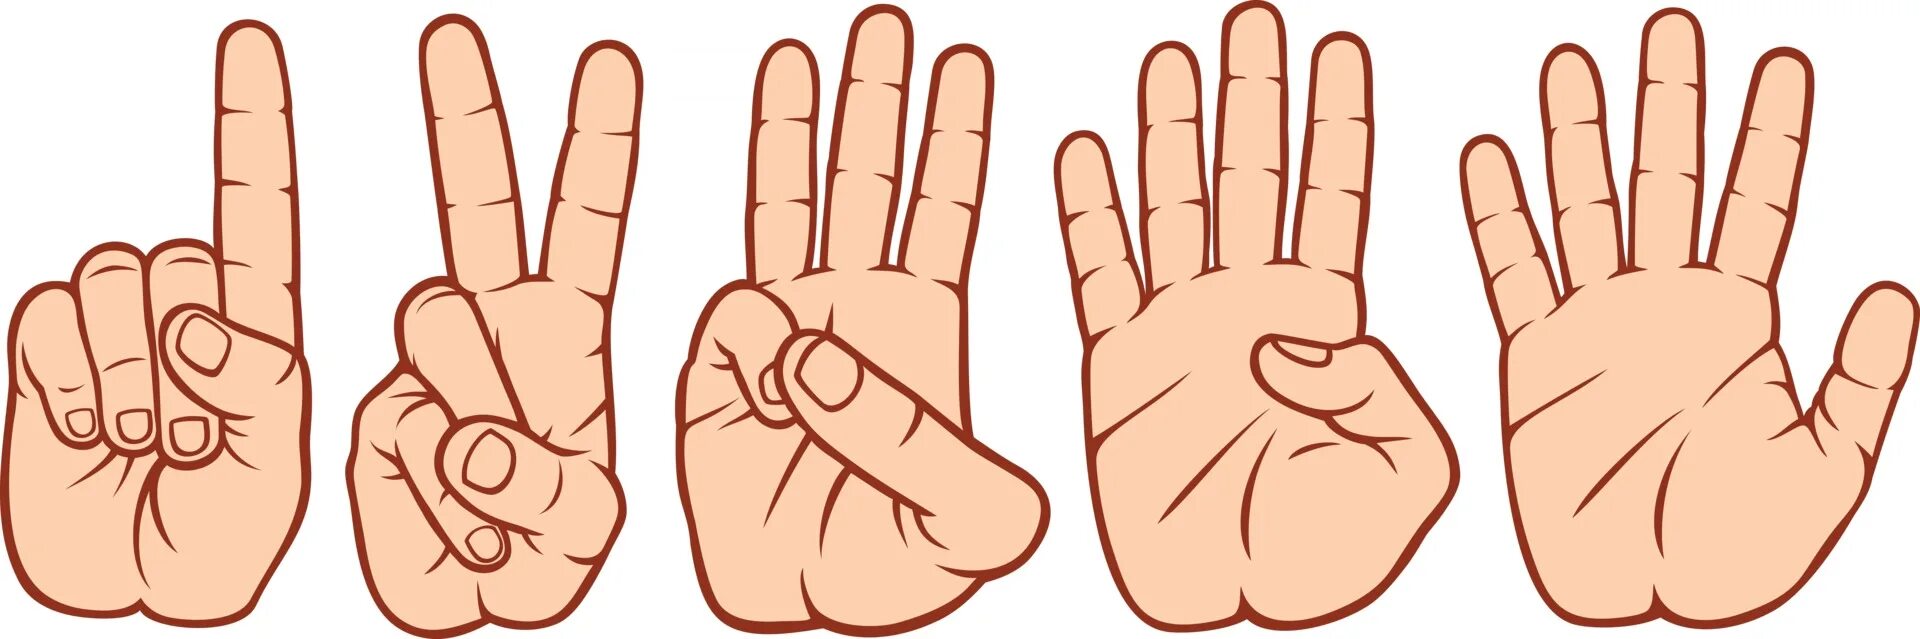 Счет на пальцах. Счет на пальцах для детей. Цифры пальчиками. Числа на пальцах для детей. Сколько лет пальцами